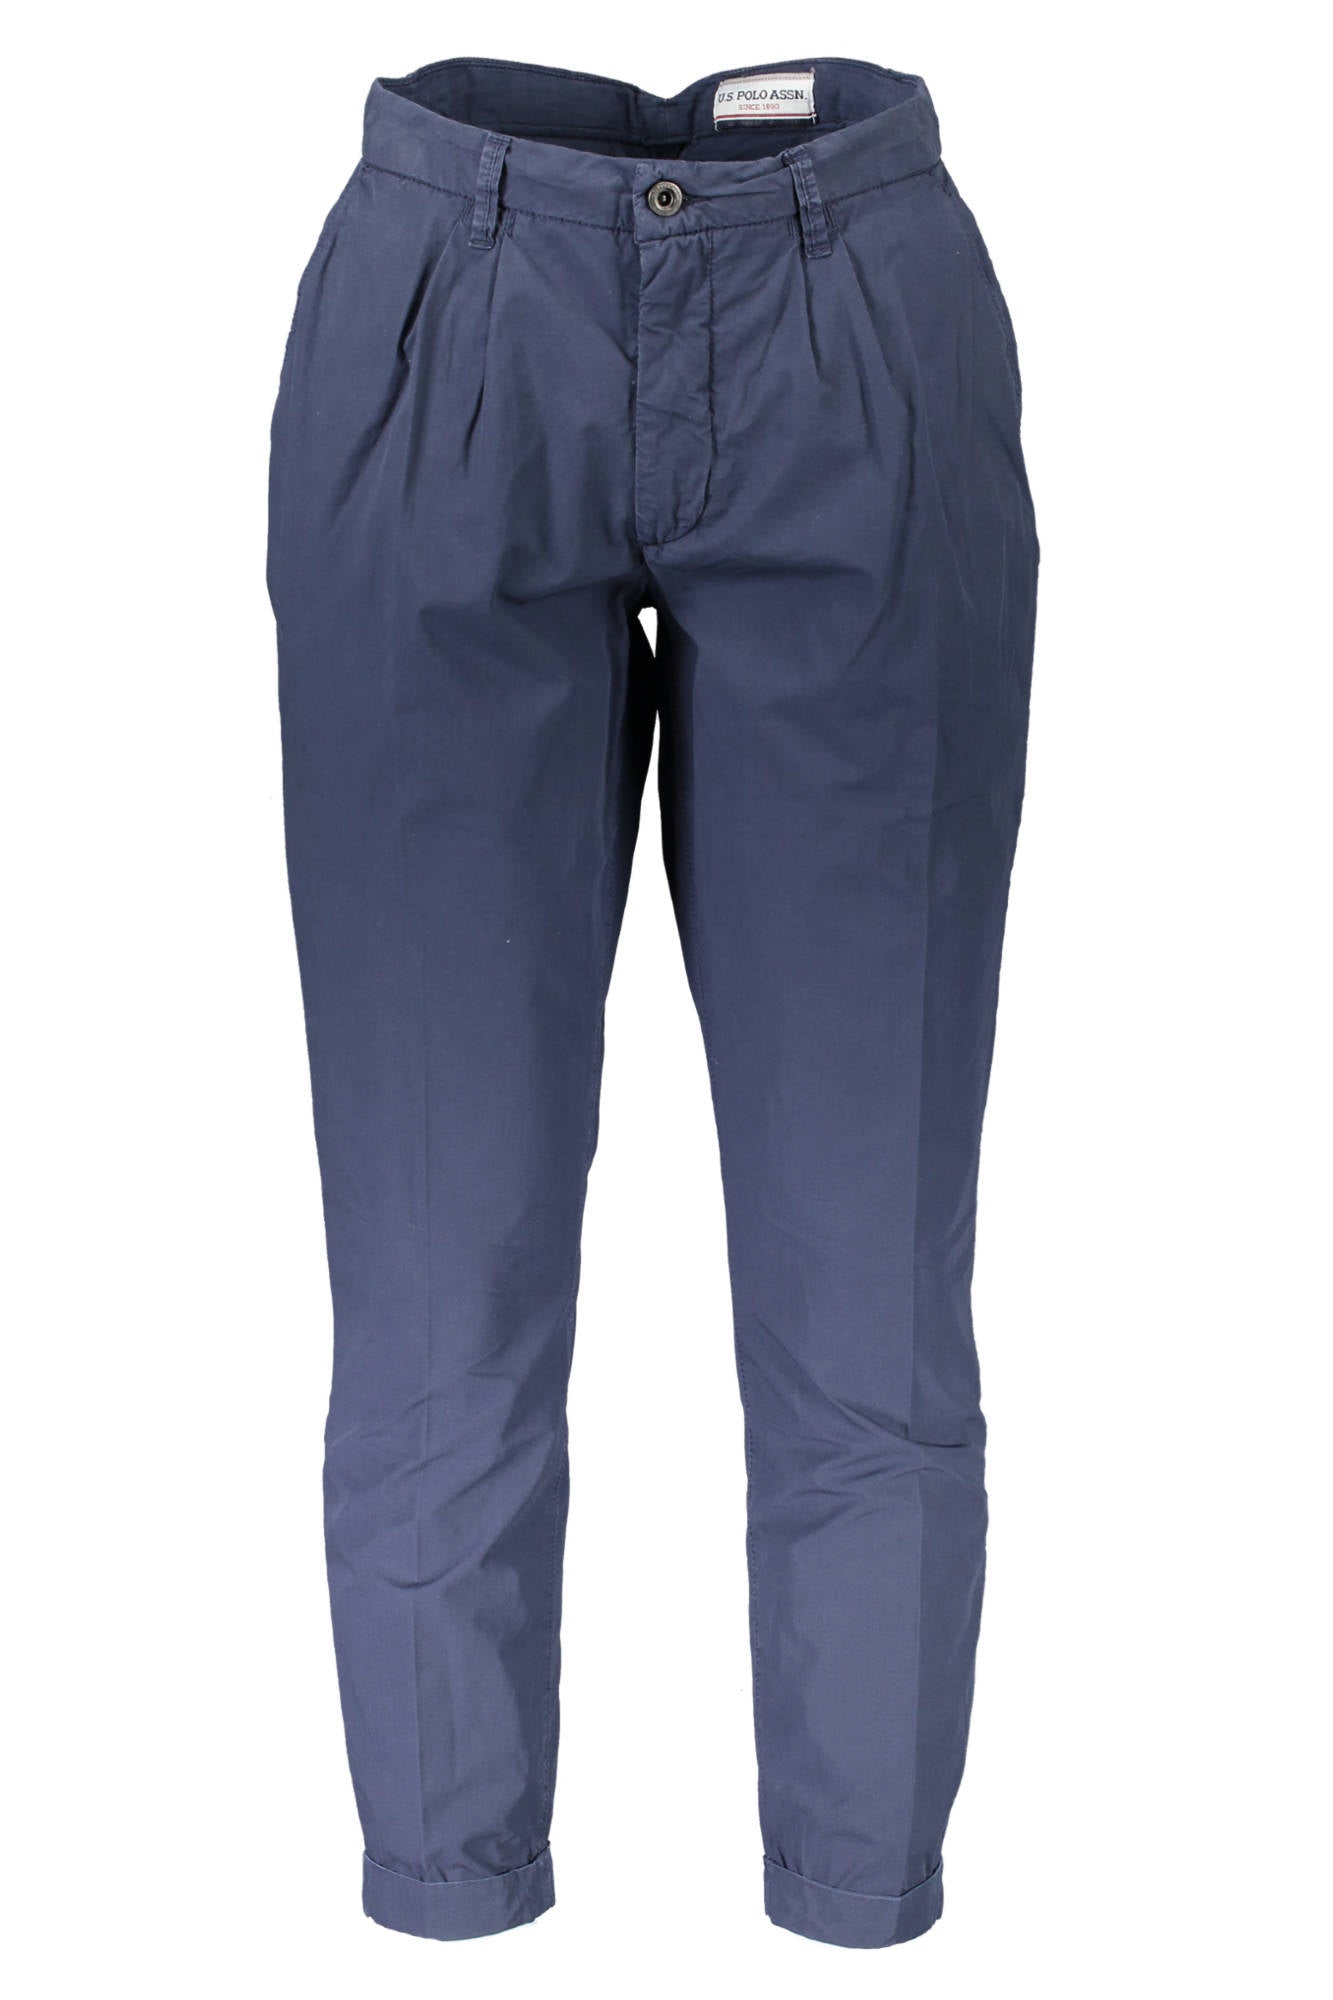 U.S. POLO ASSN. Blue Jeans & Pant - Fizigo